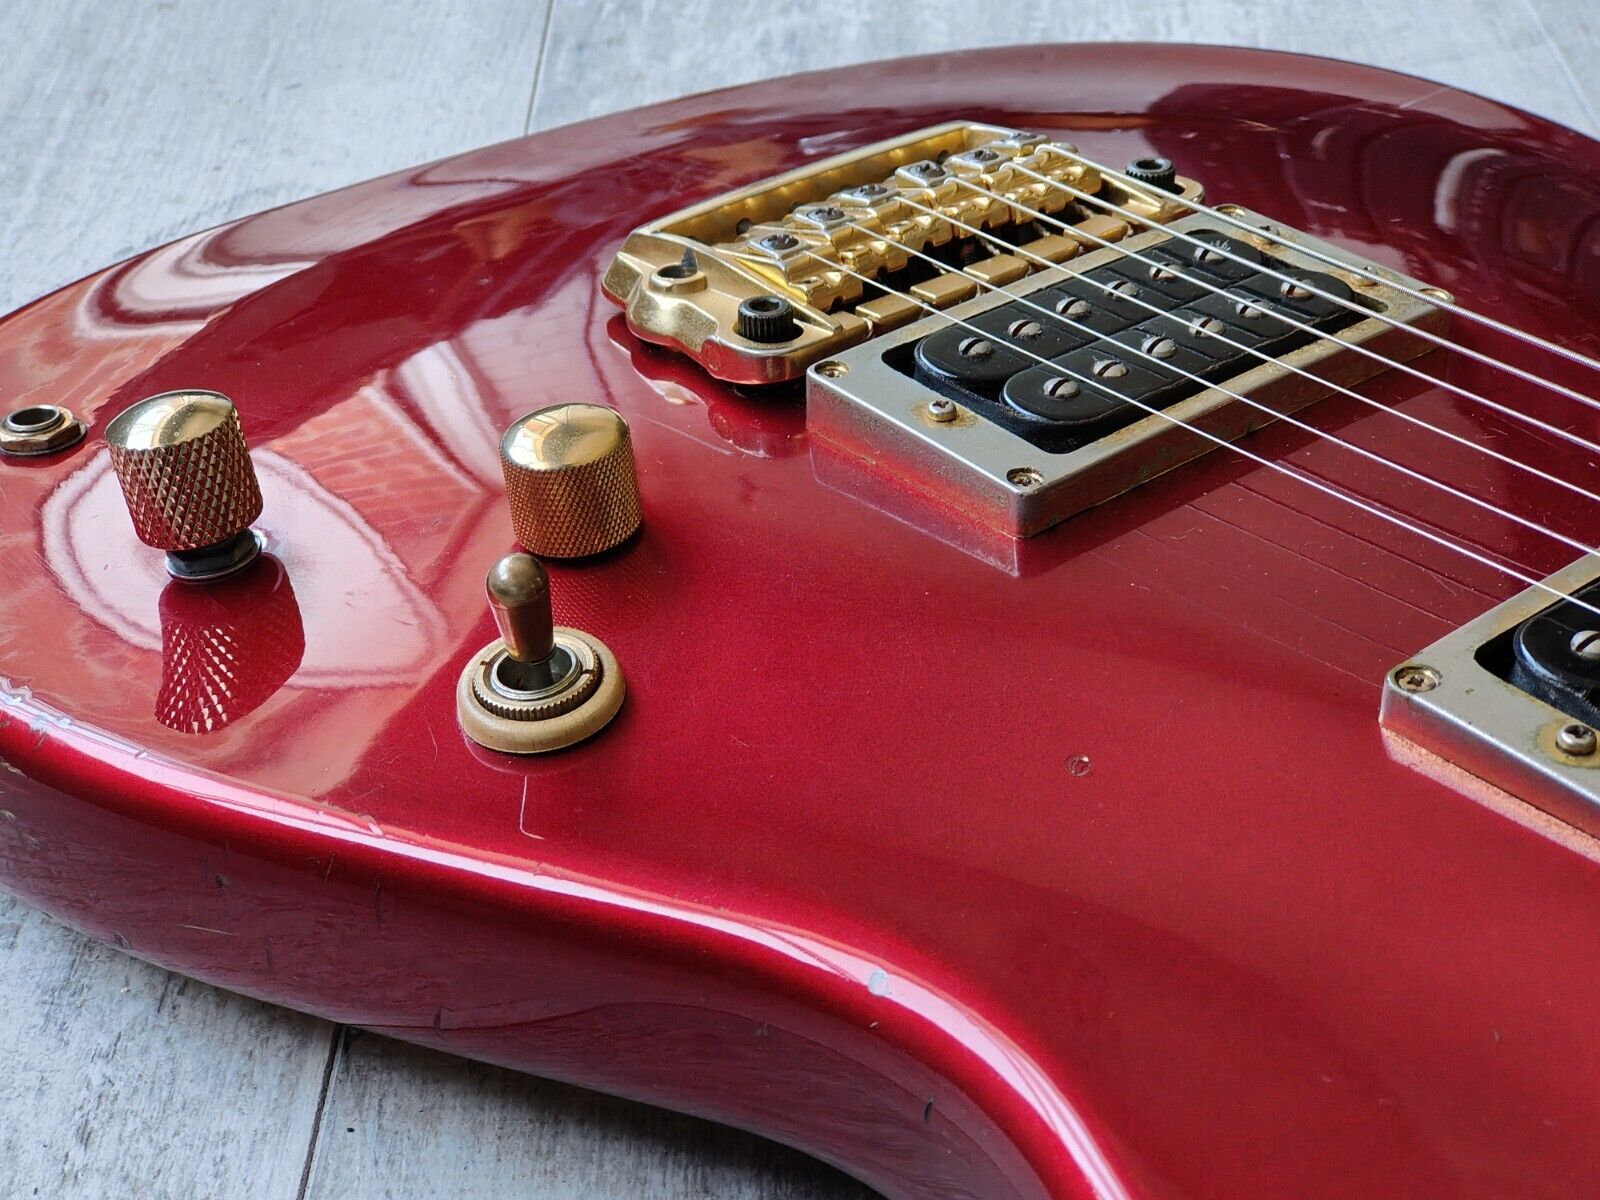 1983 Ibanez Japan RS450 Roadstar II Vintage Electric Guitar (Fire Red)